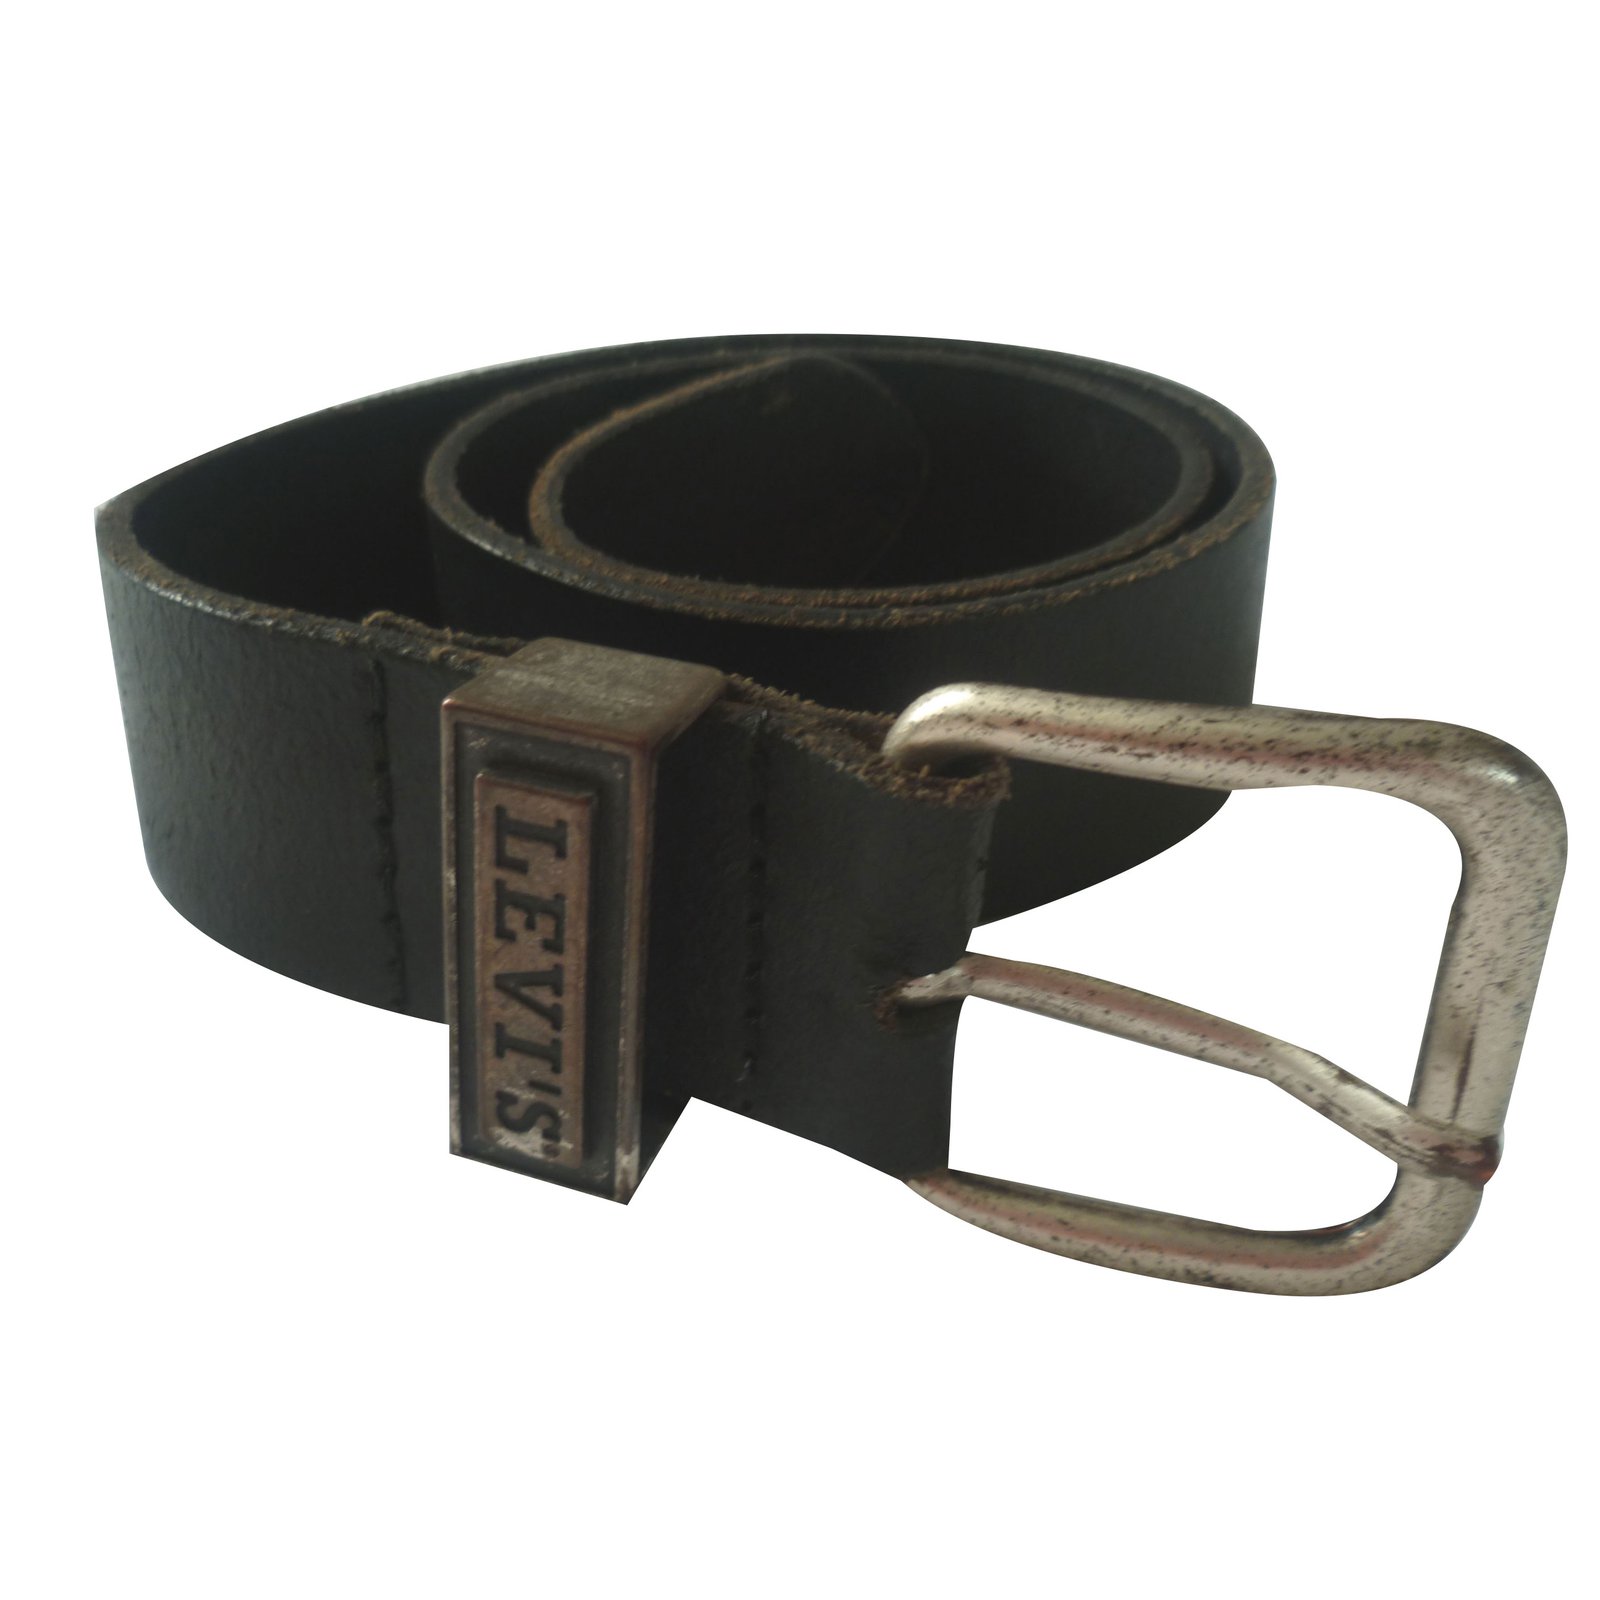 levi's belts